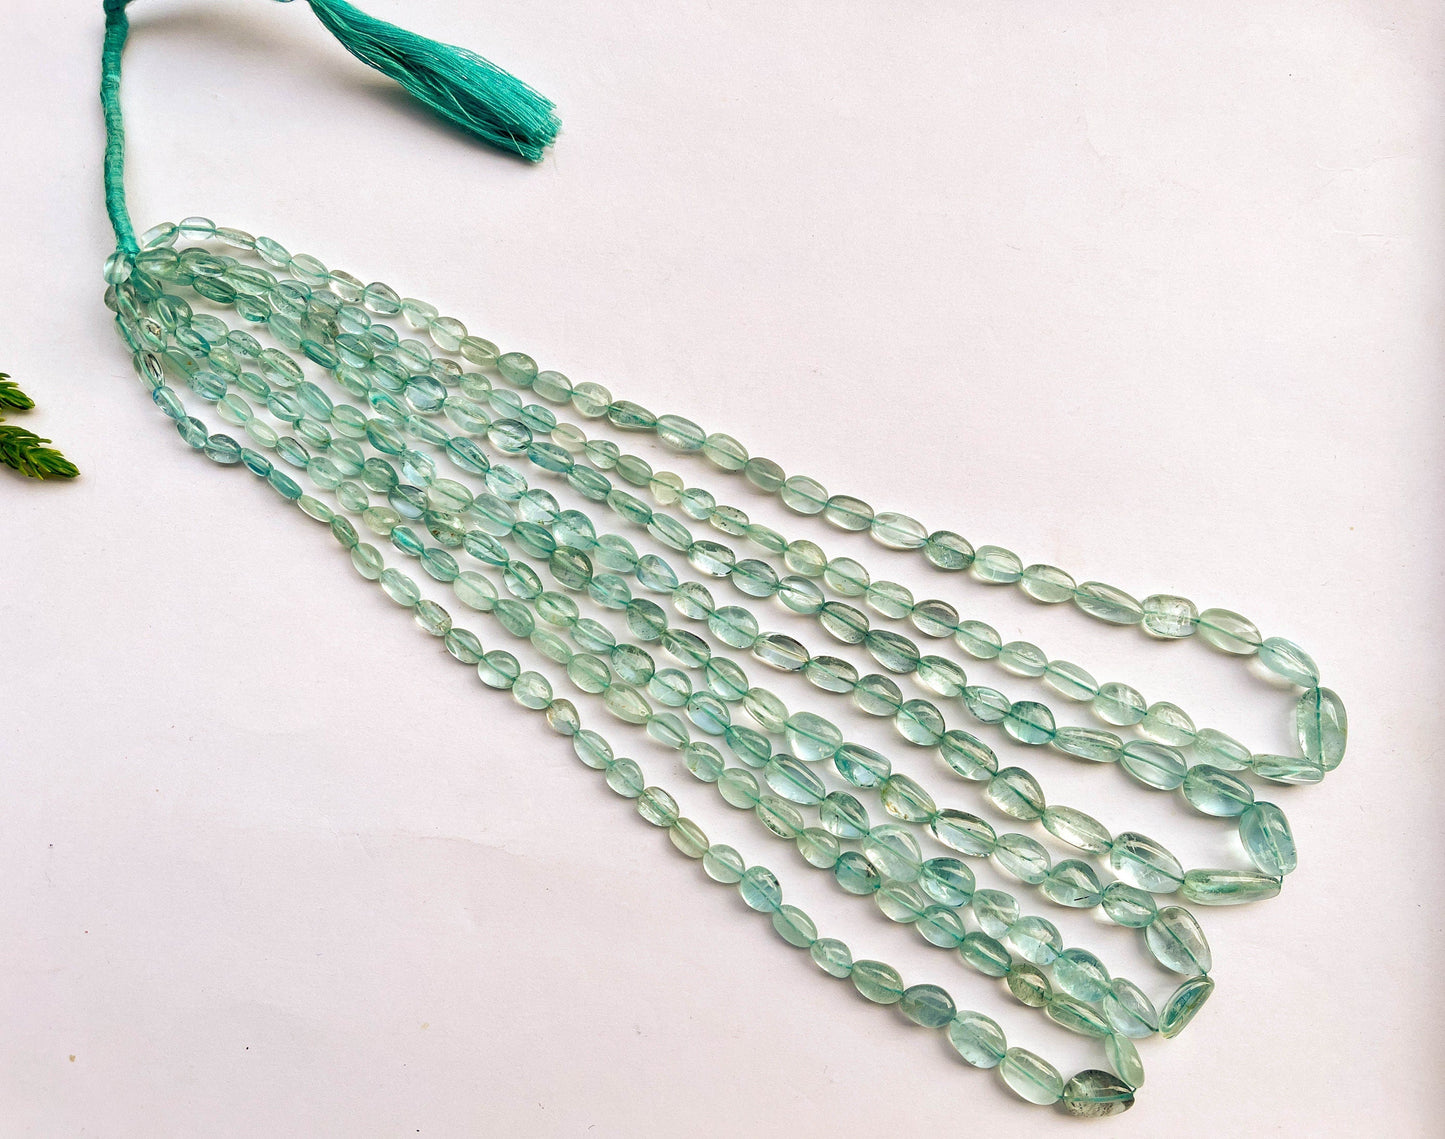 Aquamarine Oval Shape Beads, Natural Aquamarine Gemstone Beads, 4x6mm to 10x12mm, 16 Inch String Beadsforyourjewelry